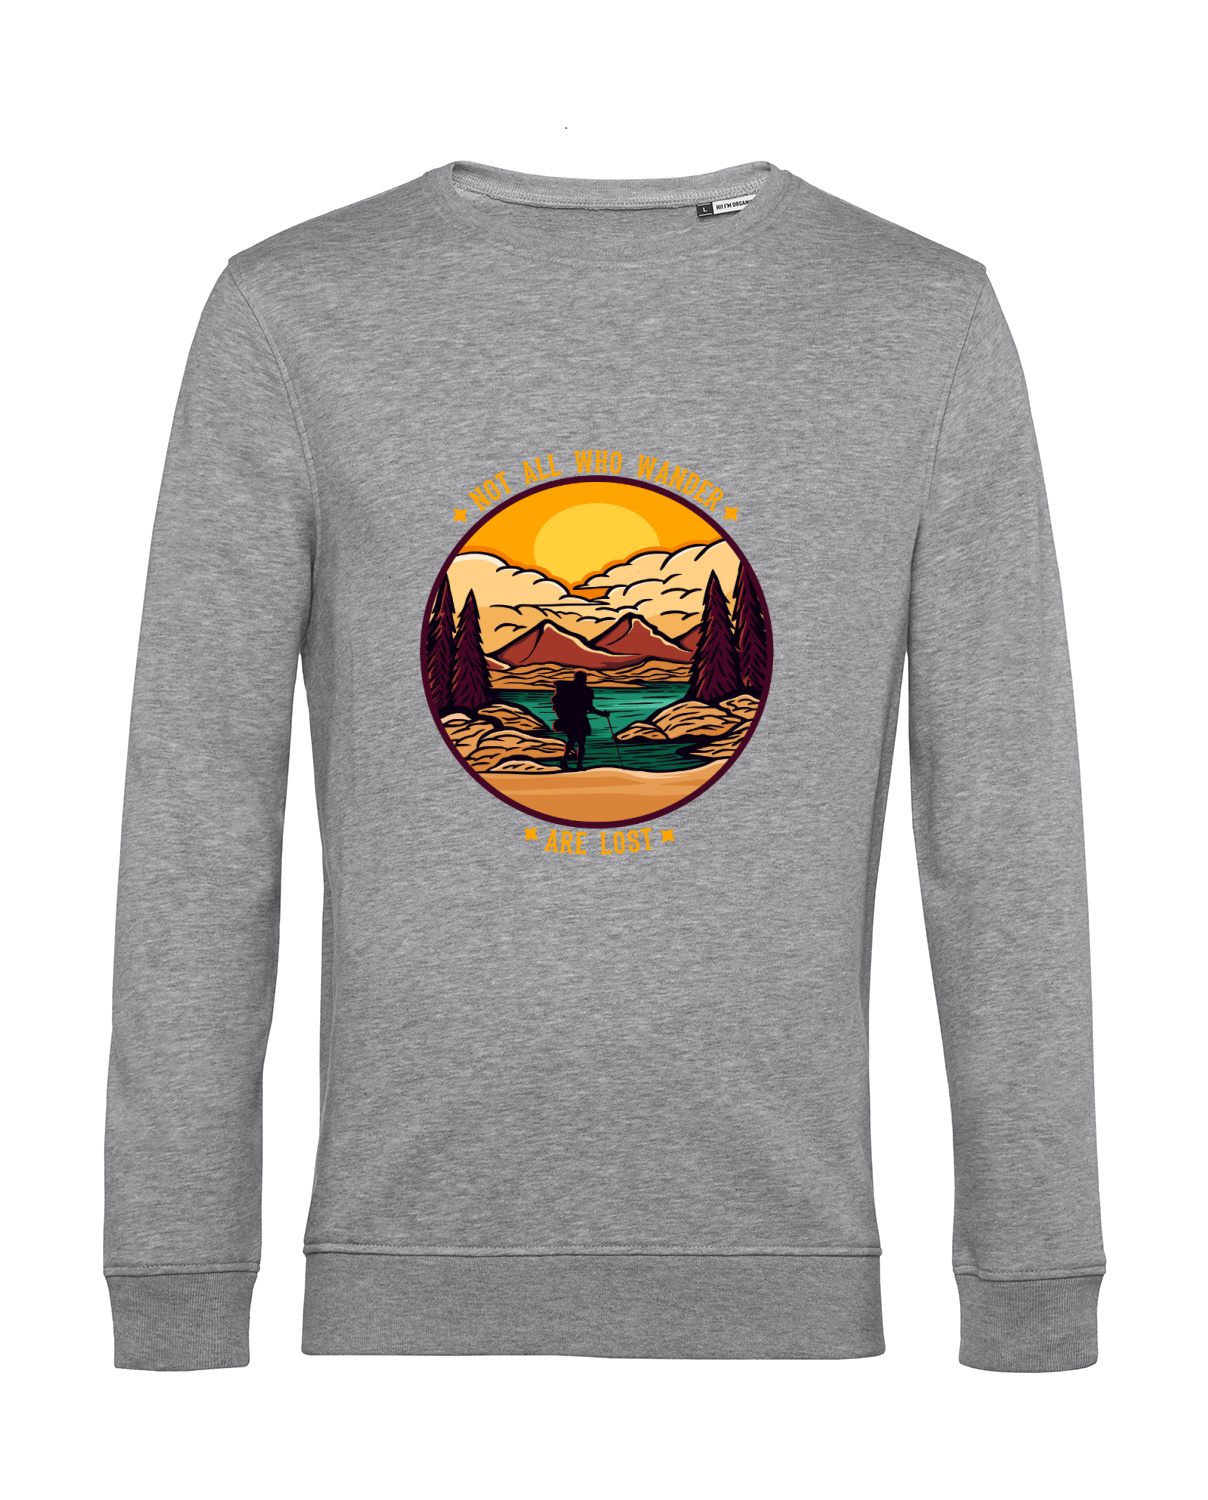 Nachhaltiges Sweatshirt Herren Outdoor - Not all who wander are lost